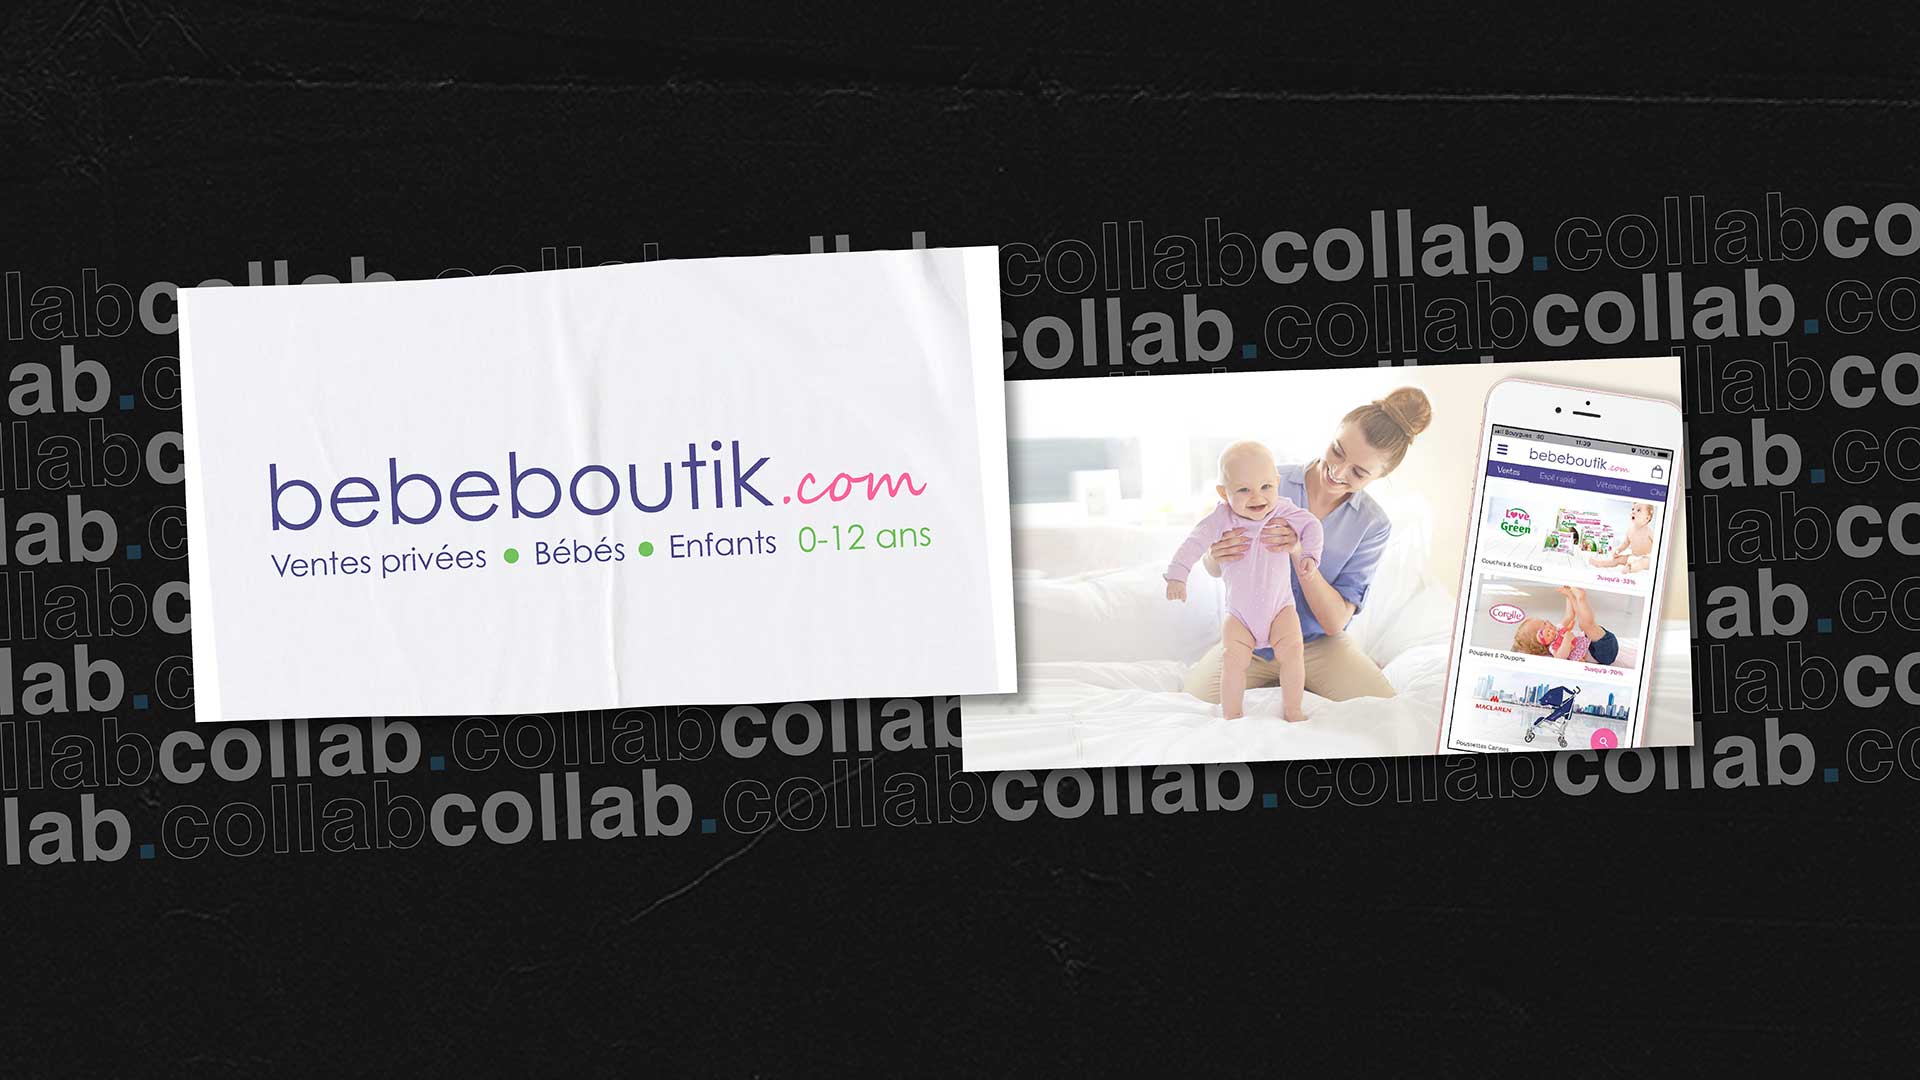 collaboration bebeboutik.com